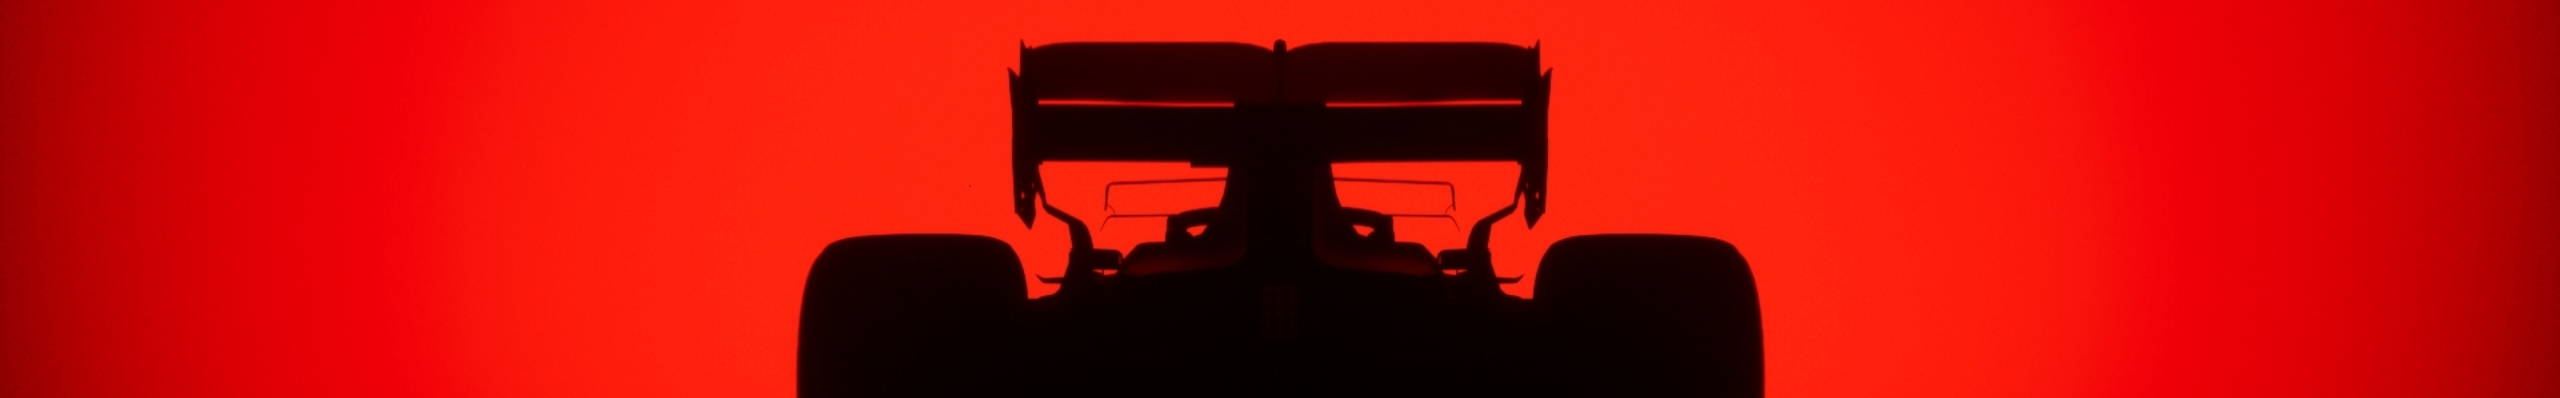 F1 Unreal Engine